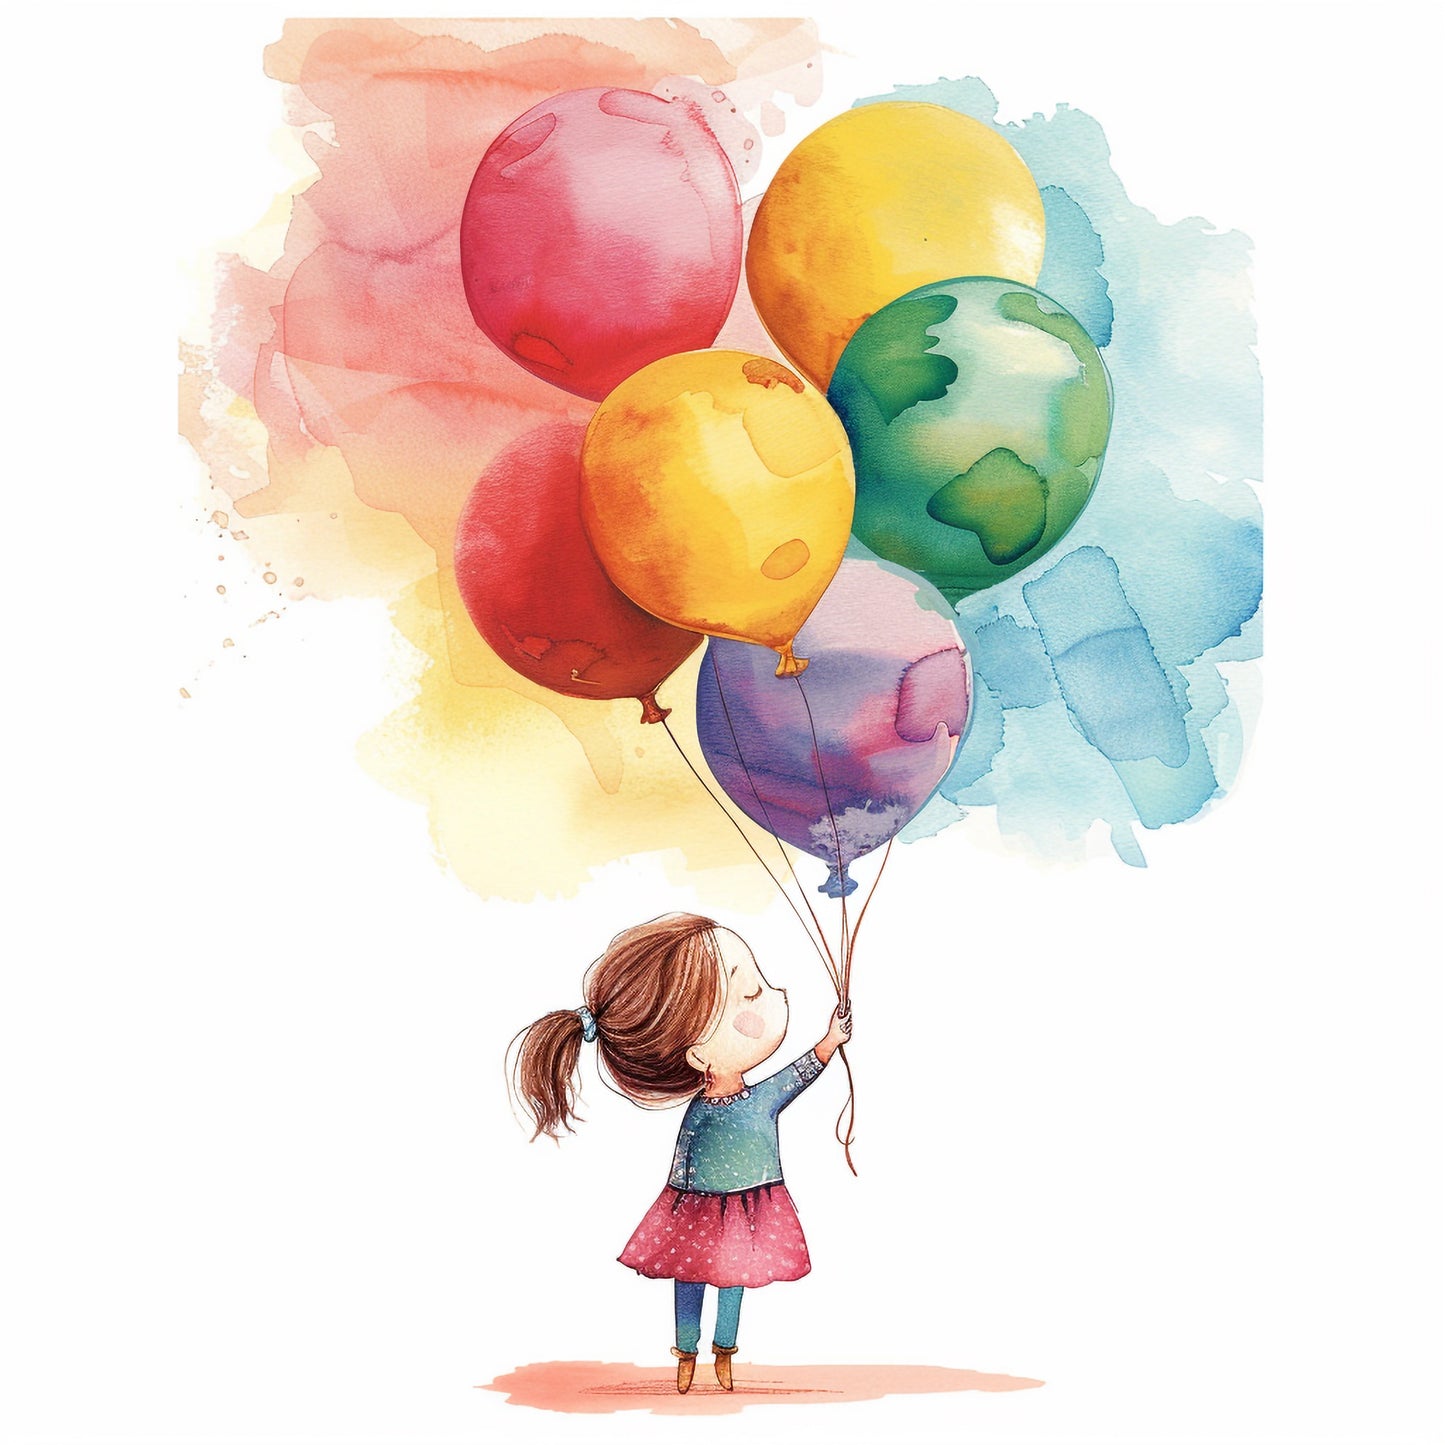 Little Girl Joyfully Holding Colorful Balloons Illustration